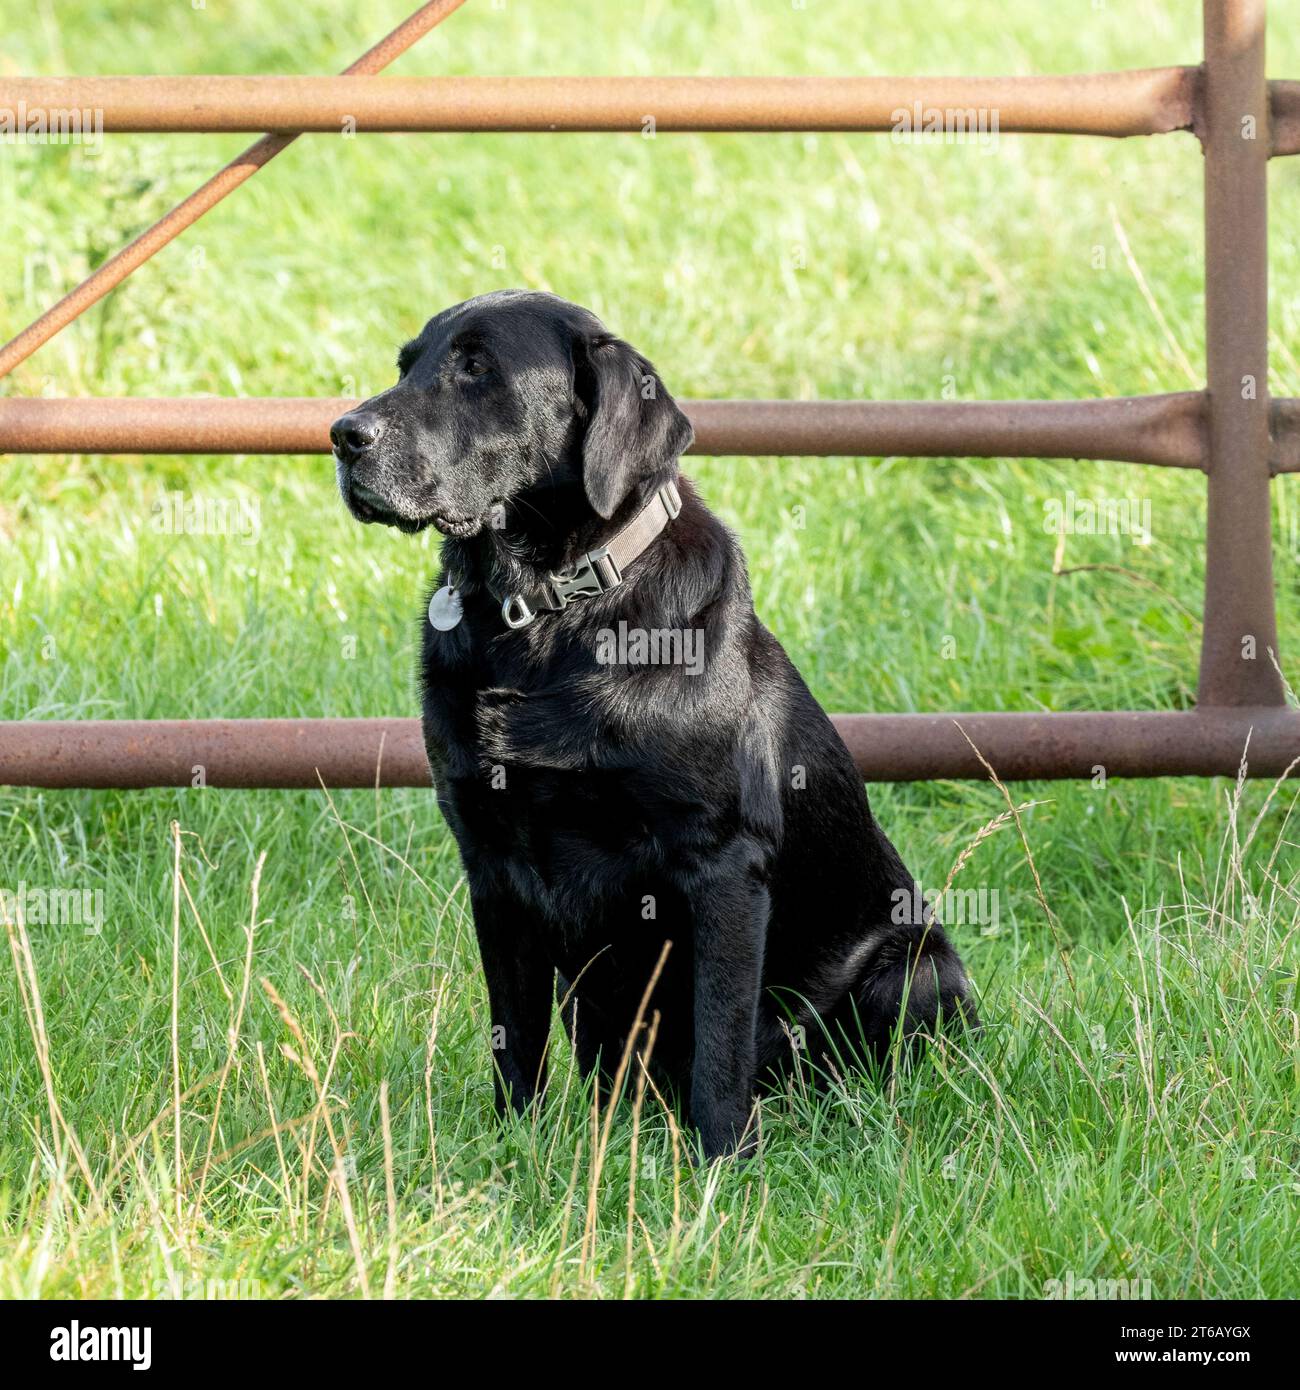 A black labrador retriever sitting next to a rusty metal five barred gate. Stock Photo